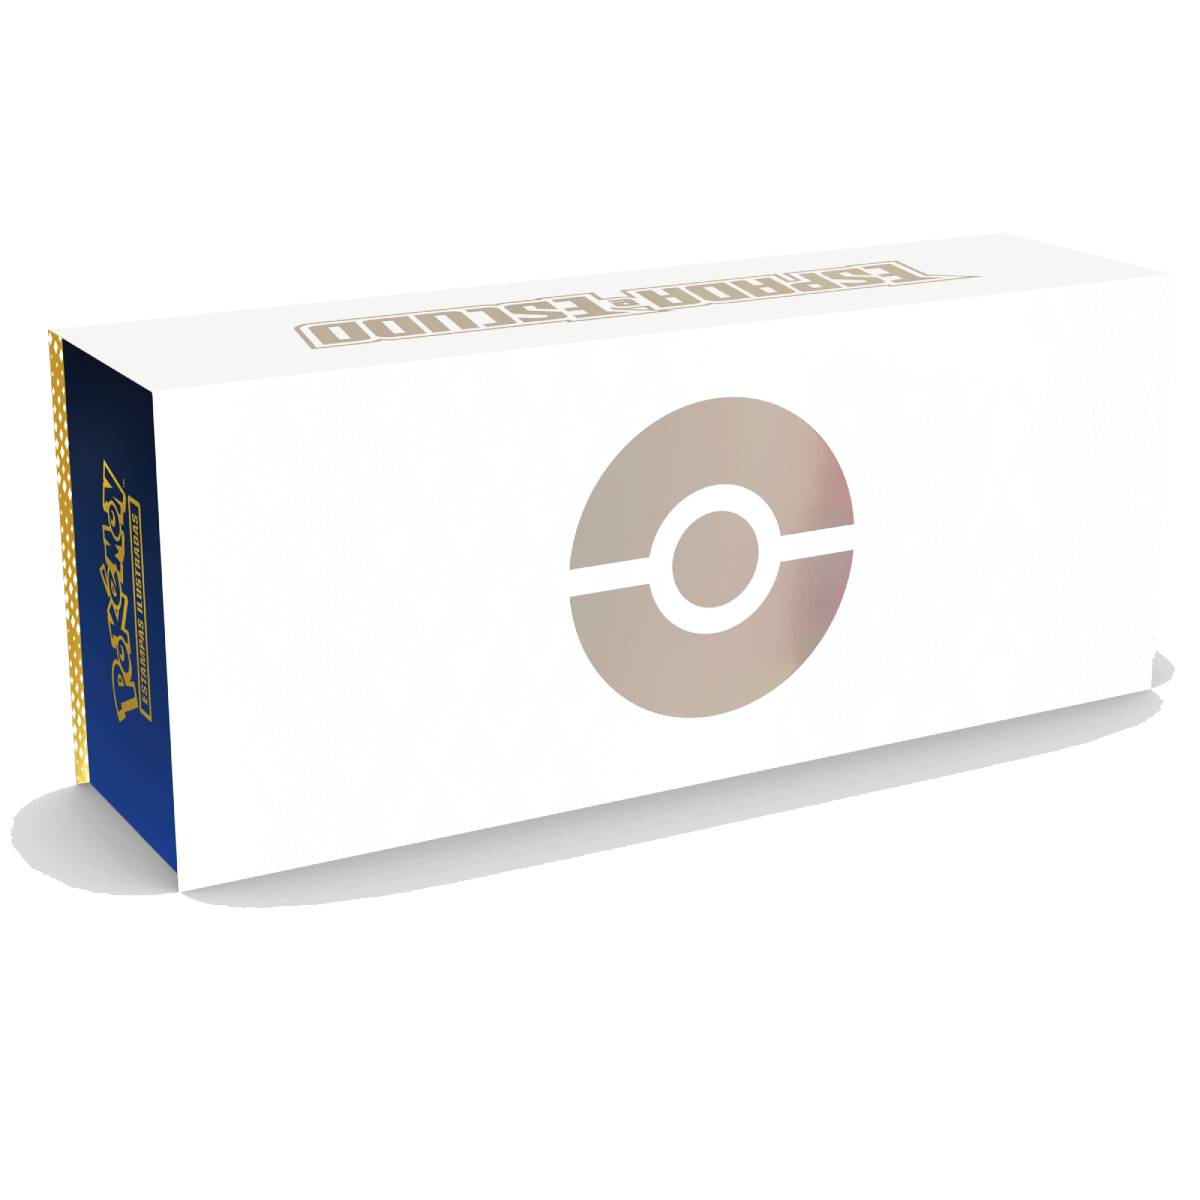 Carta Pokémon Charizard, Promoçoes e Ofertas